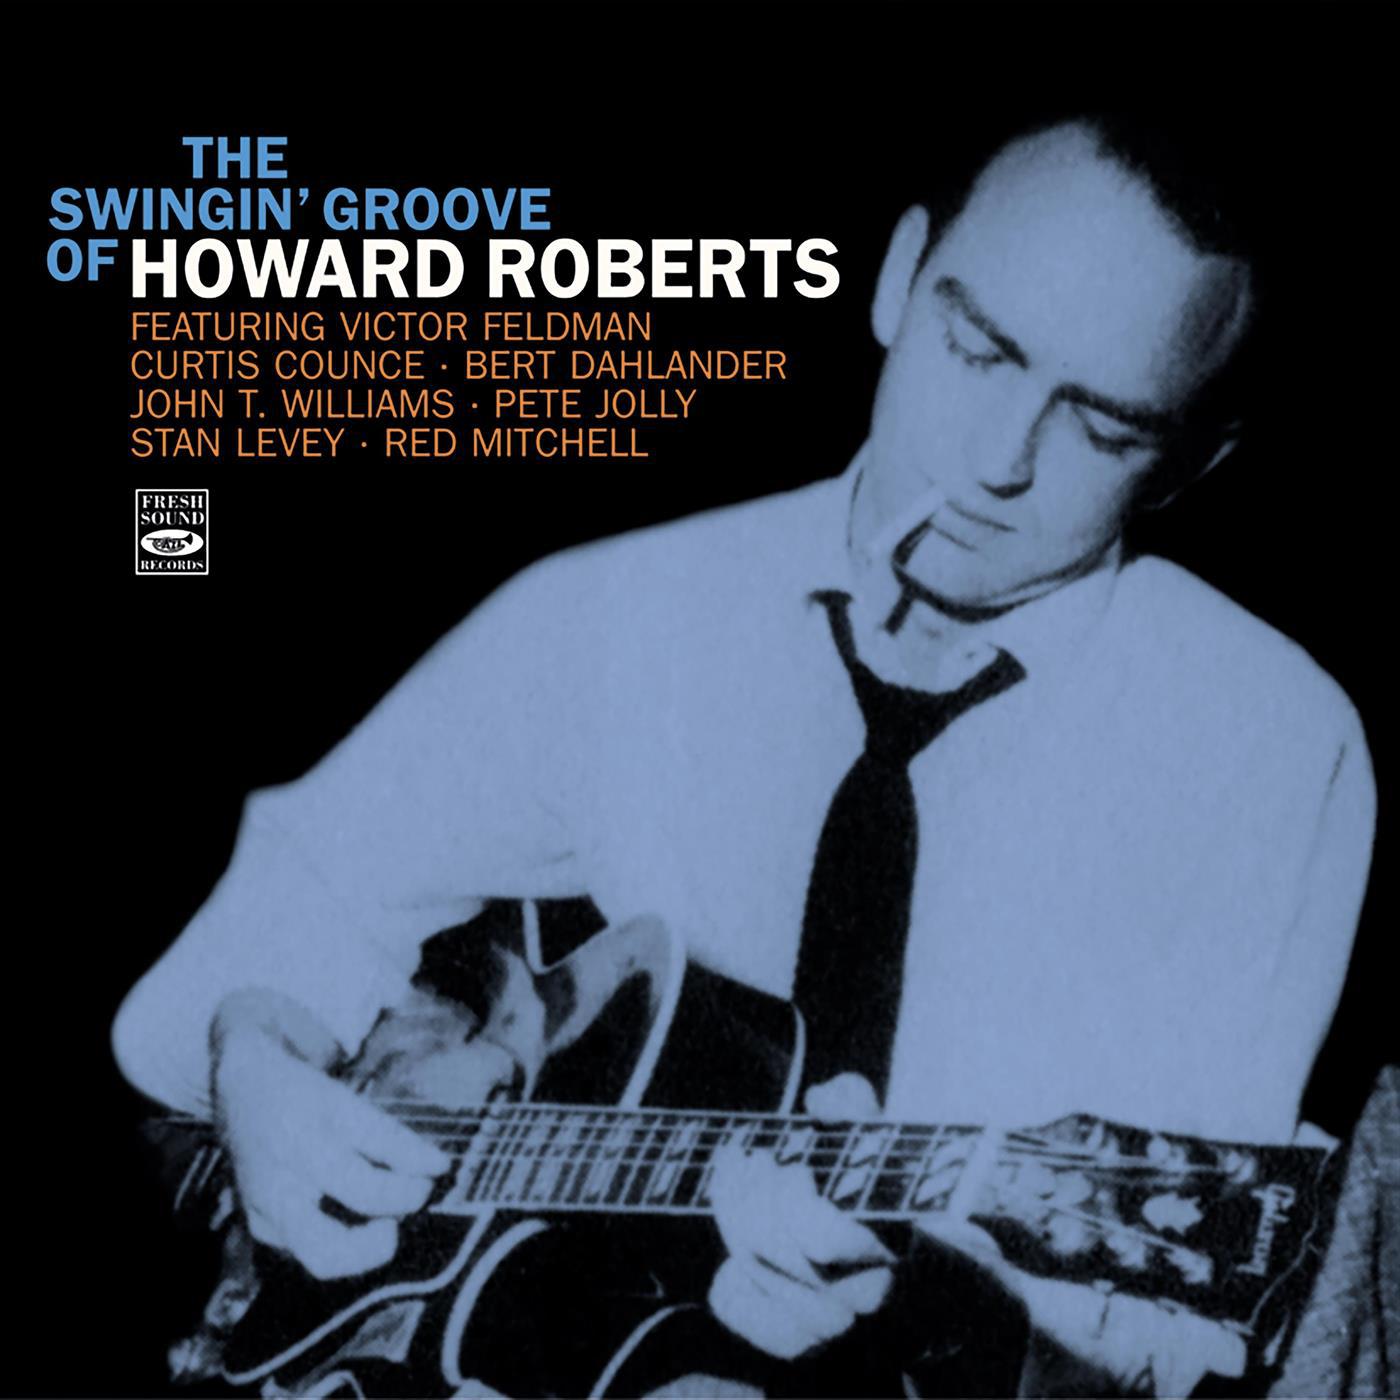 The Swingin' Groove of Howard Roberts